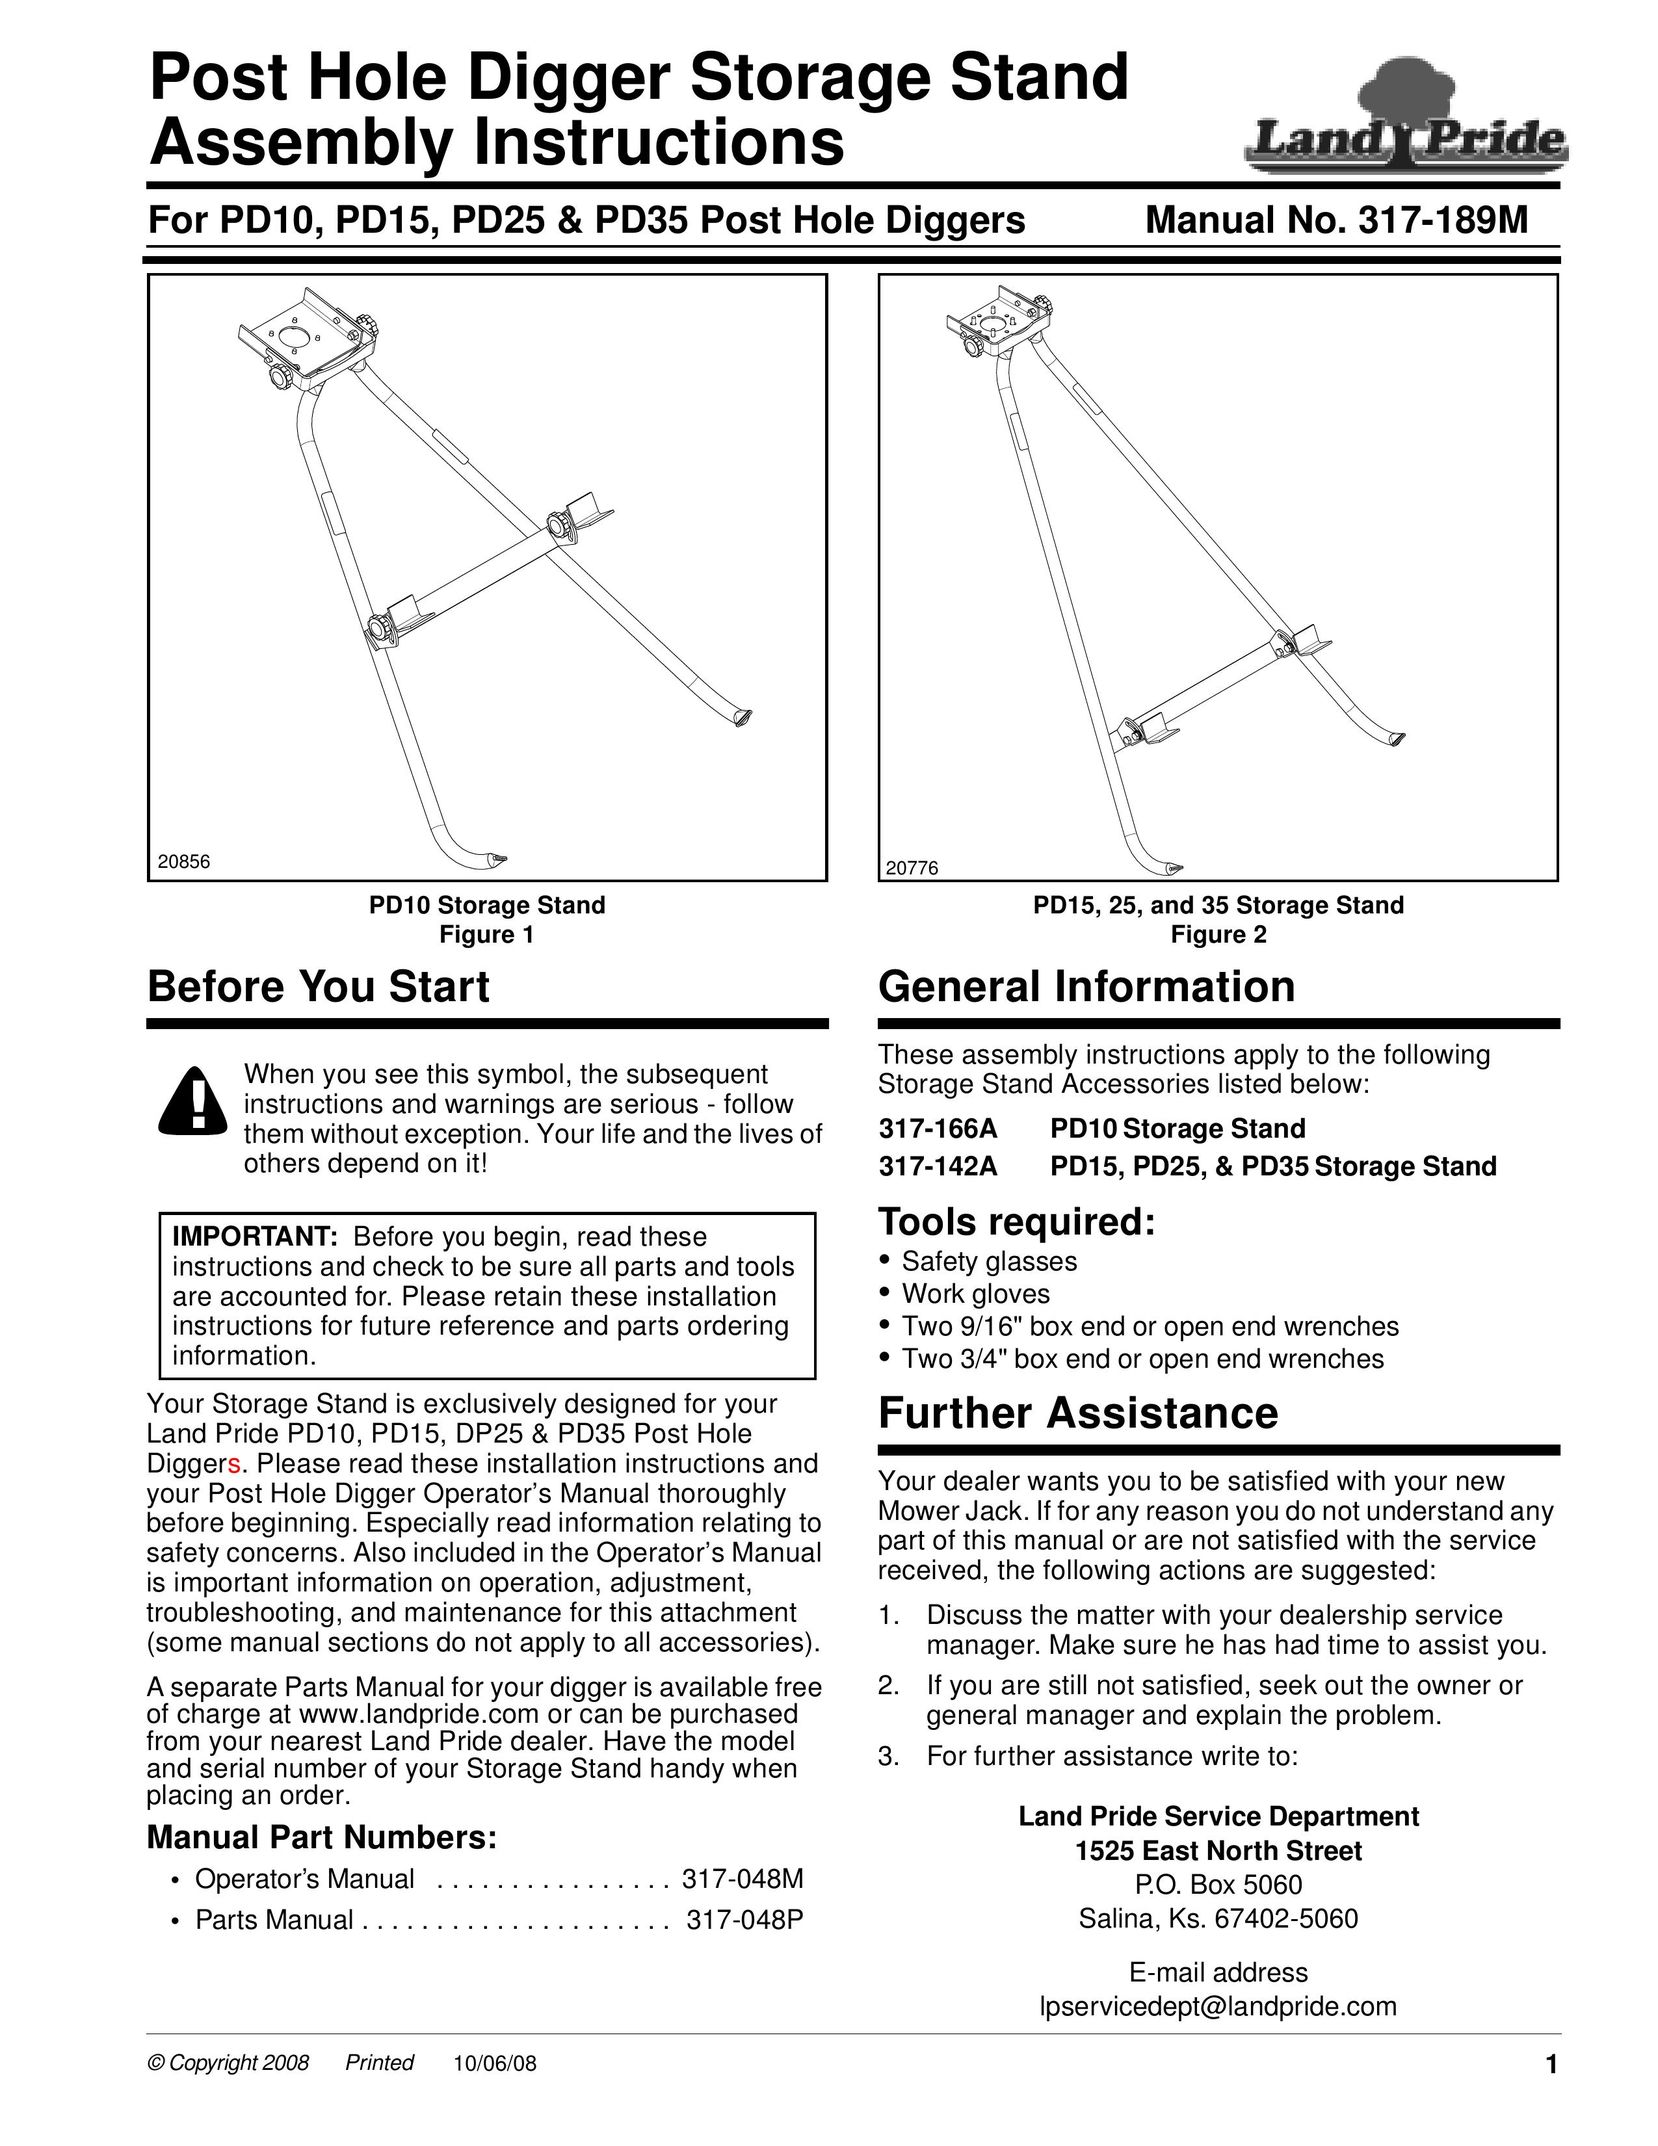 Land Pride PD15 Indoor Furnishings User Manual